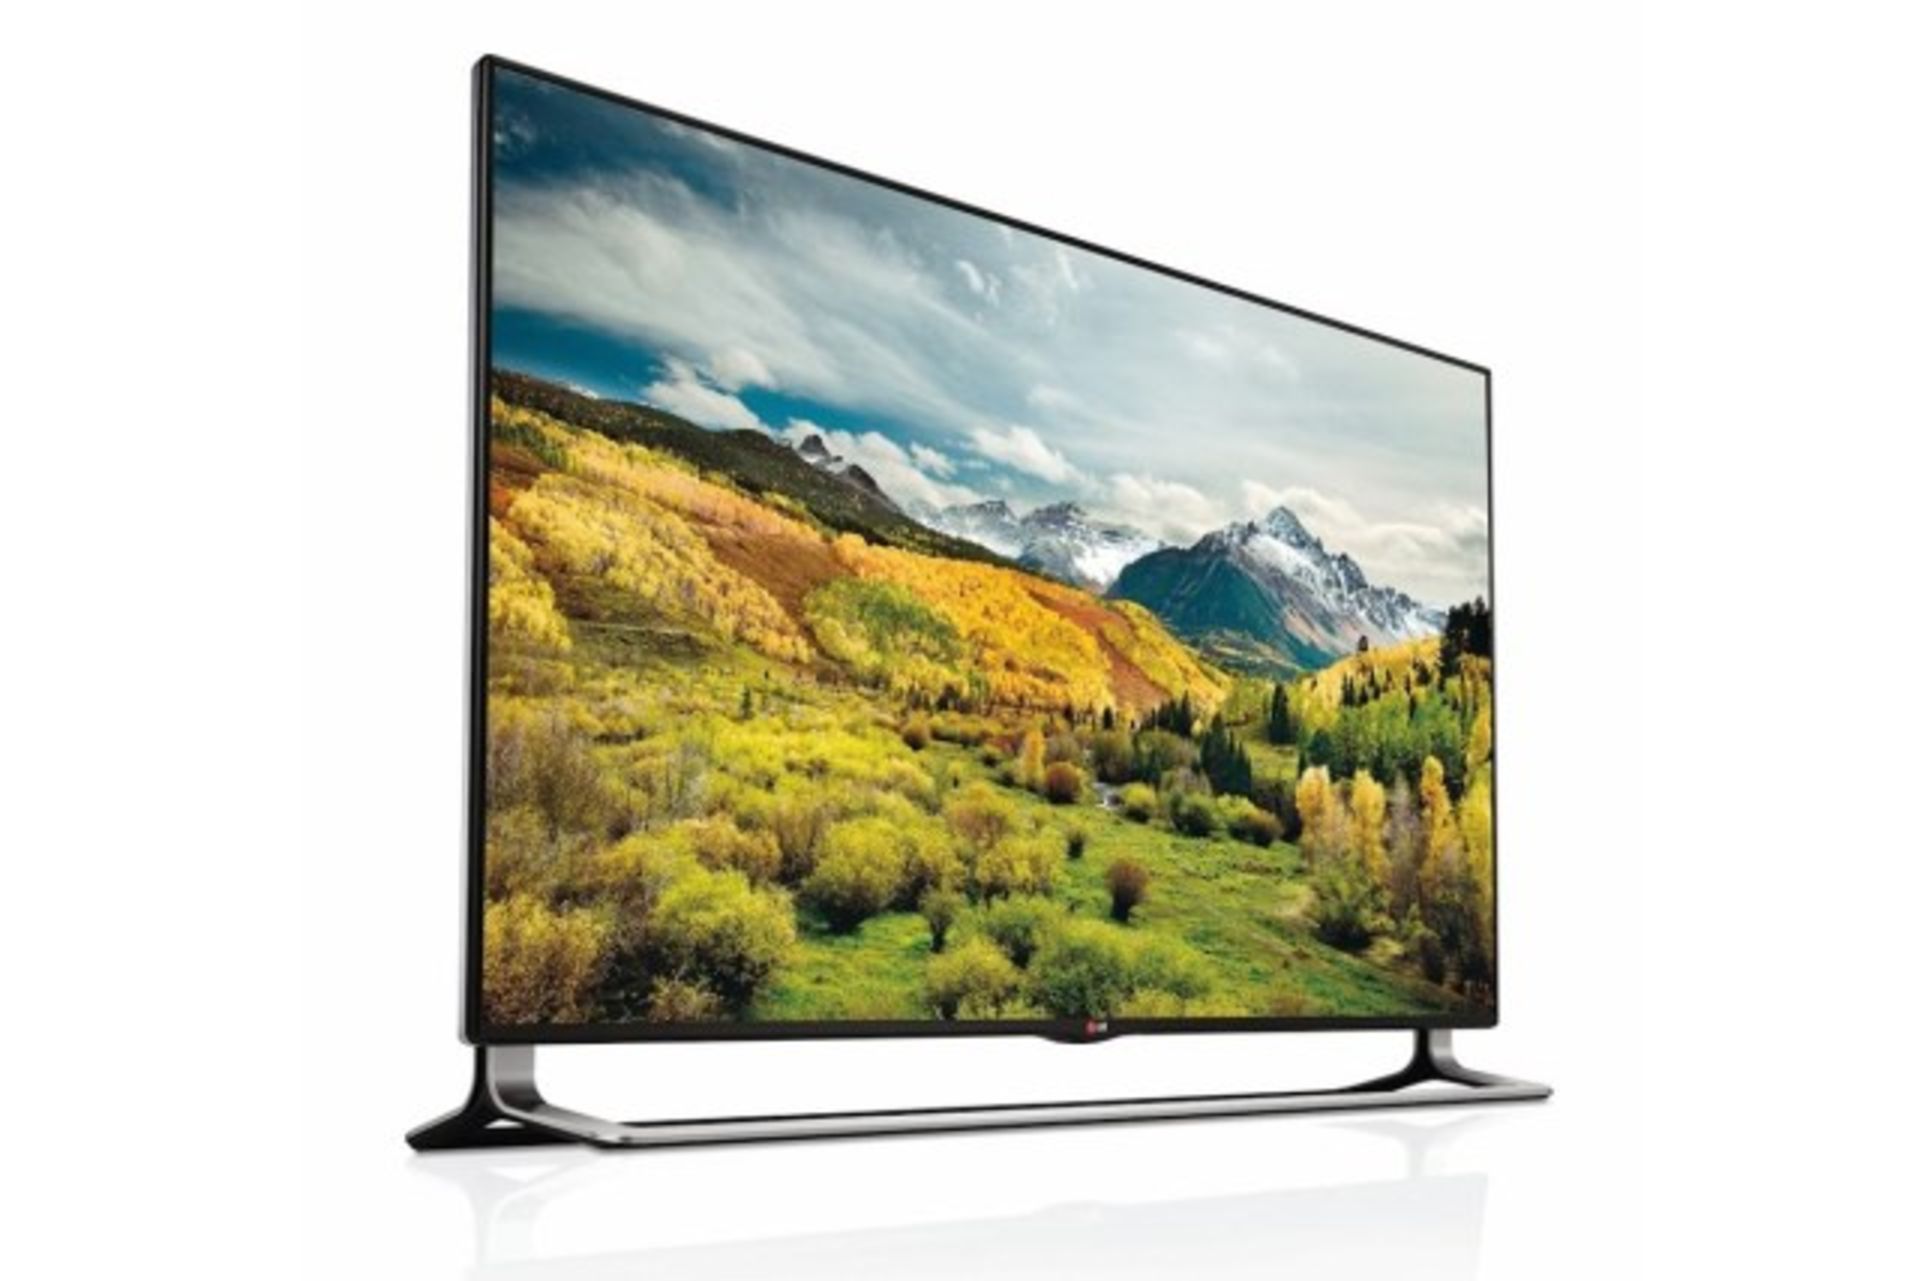 V Grade A 55LA970V LG 55" Widescreen UHD 4K LED LCD 3D Smart TV With IPS Panel Freeview HD - Built